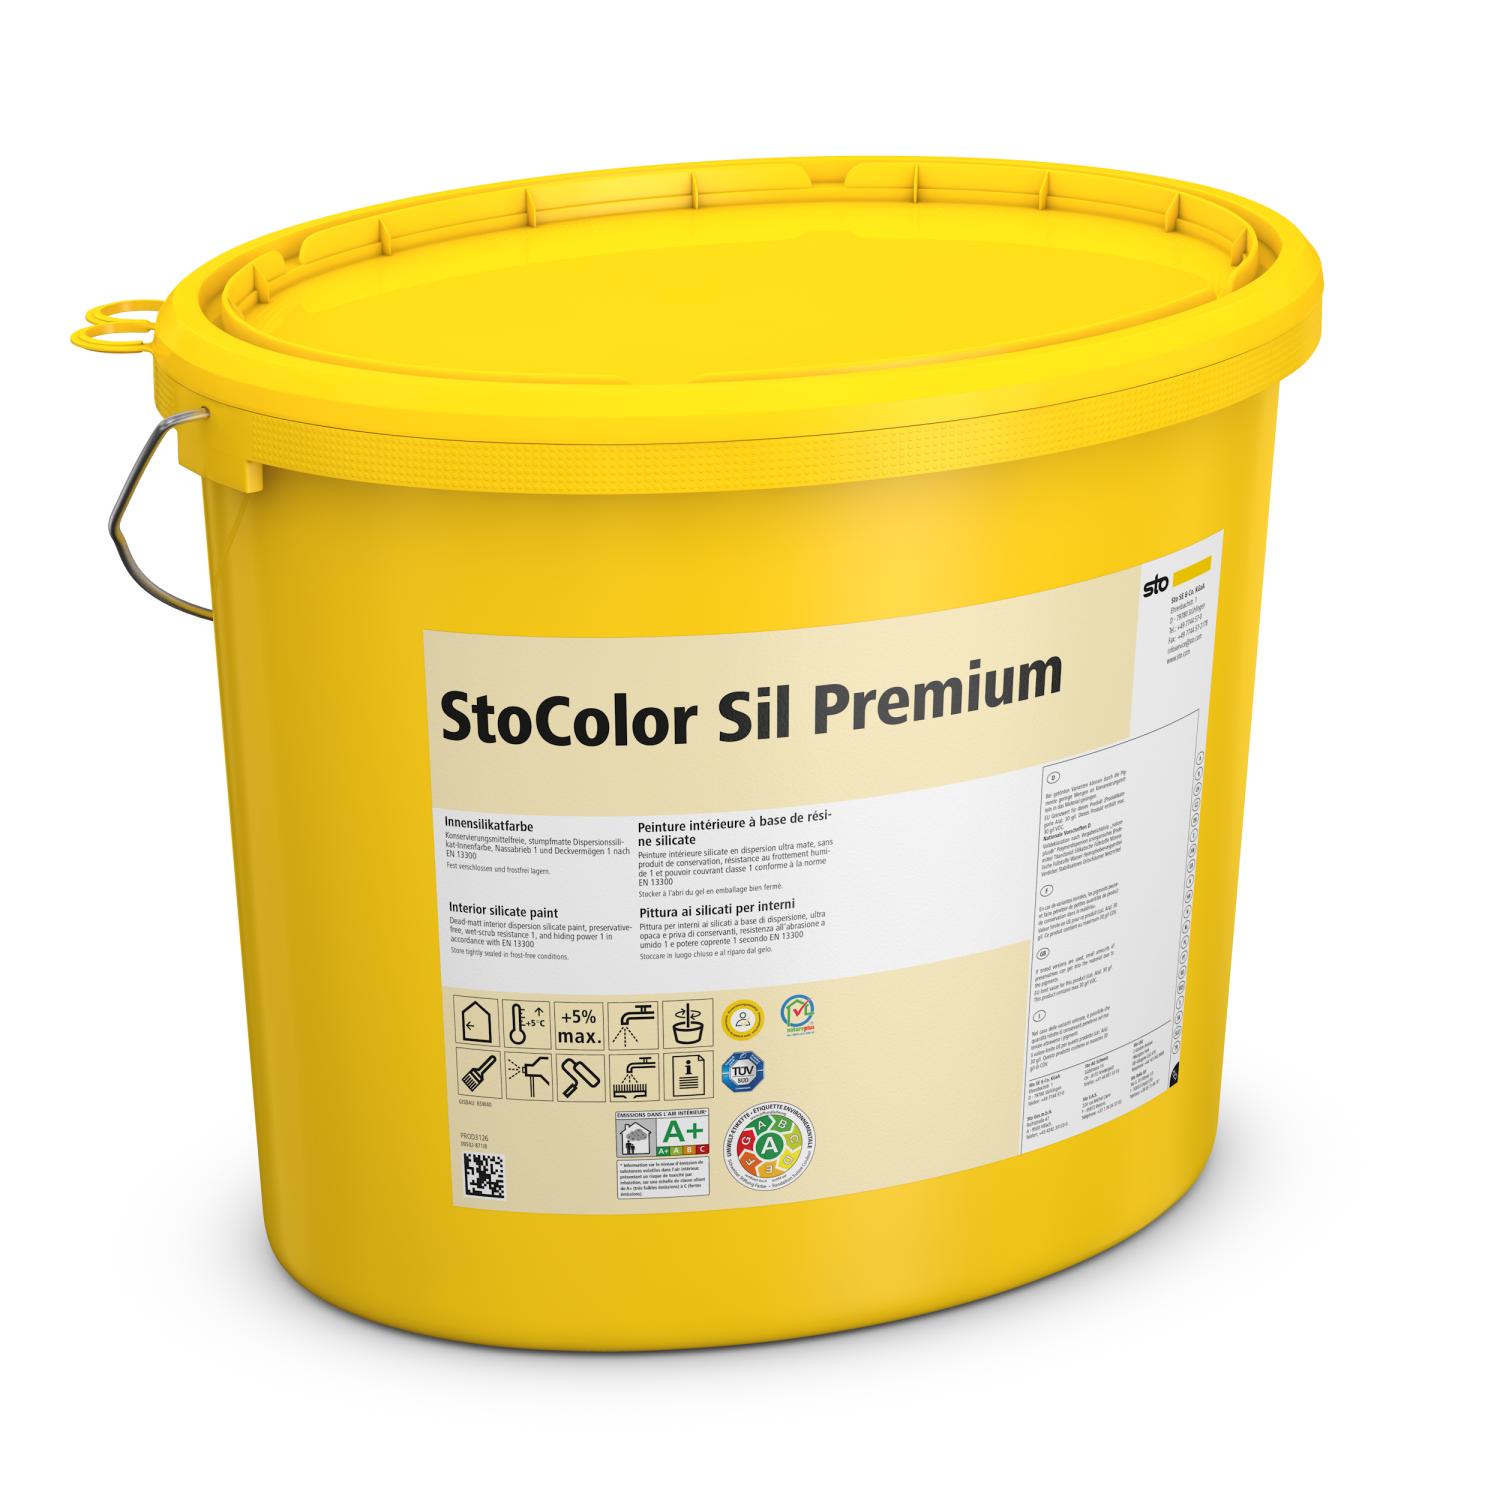 StoColor Sil Premium - getönt, 15 l Eimer